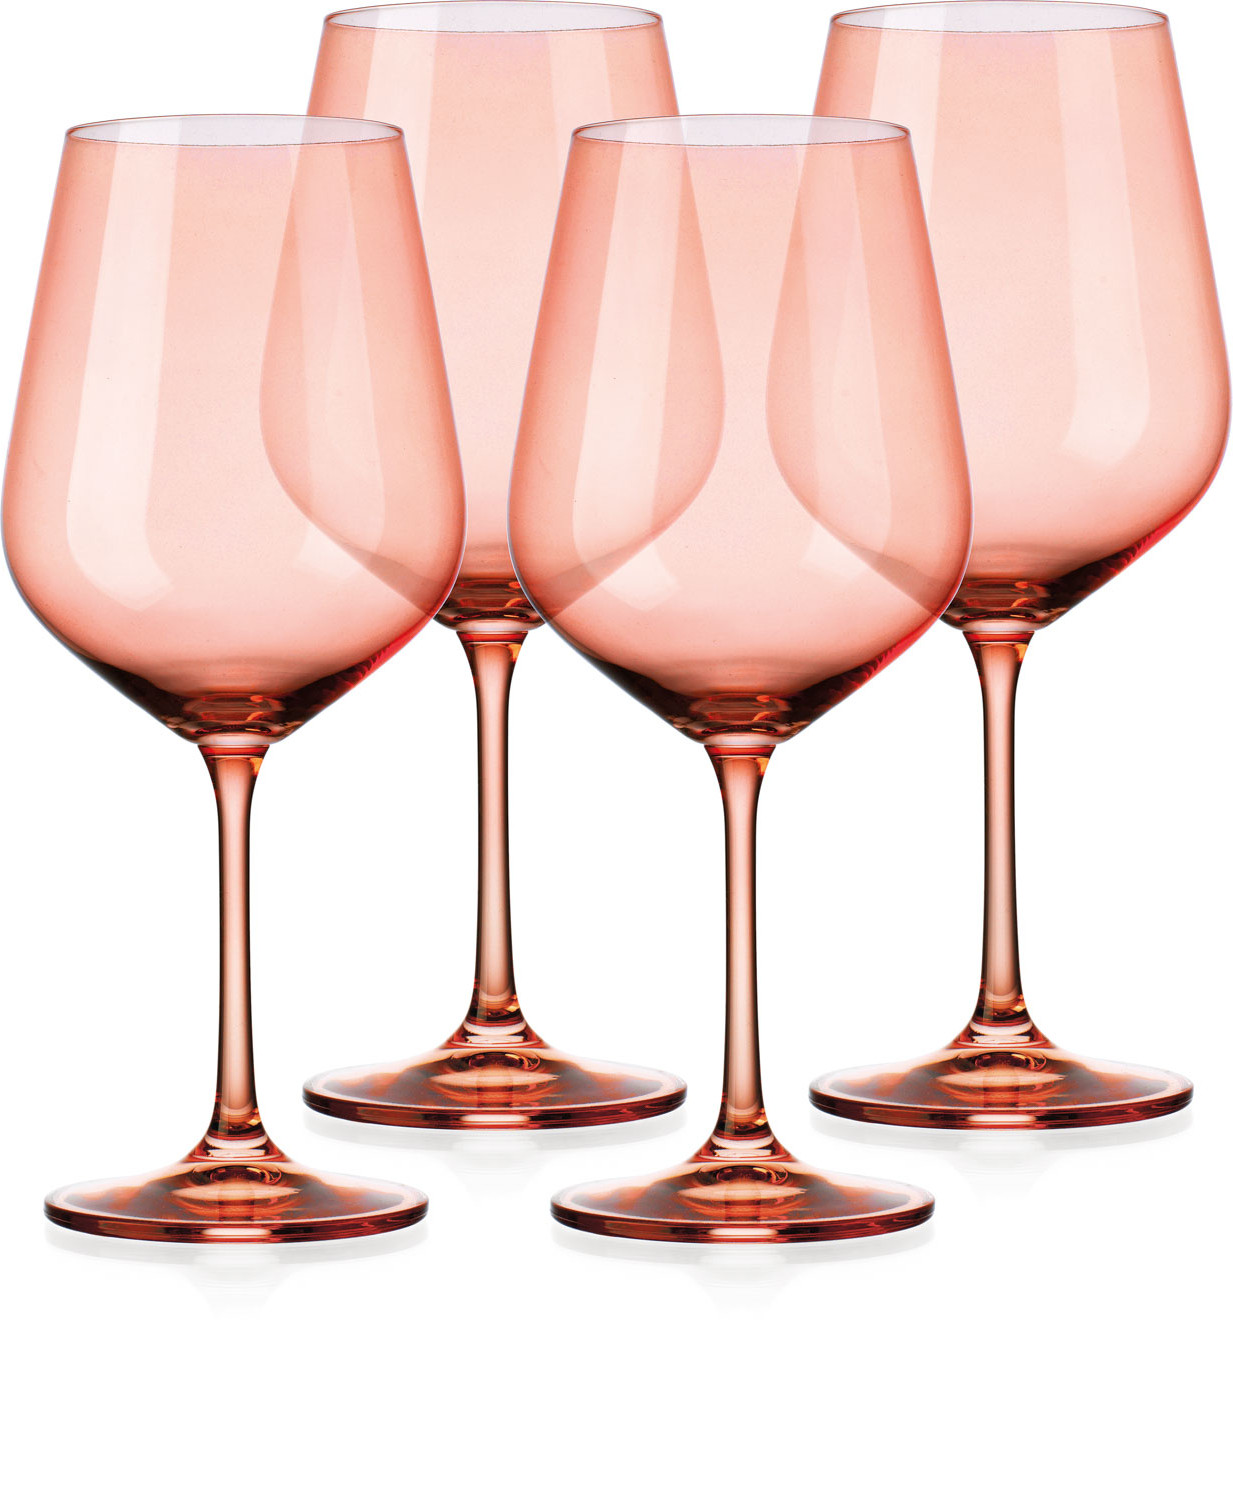 Translucent Blush Coral Large Wine Glasses (Set of 4)